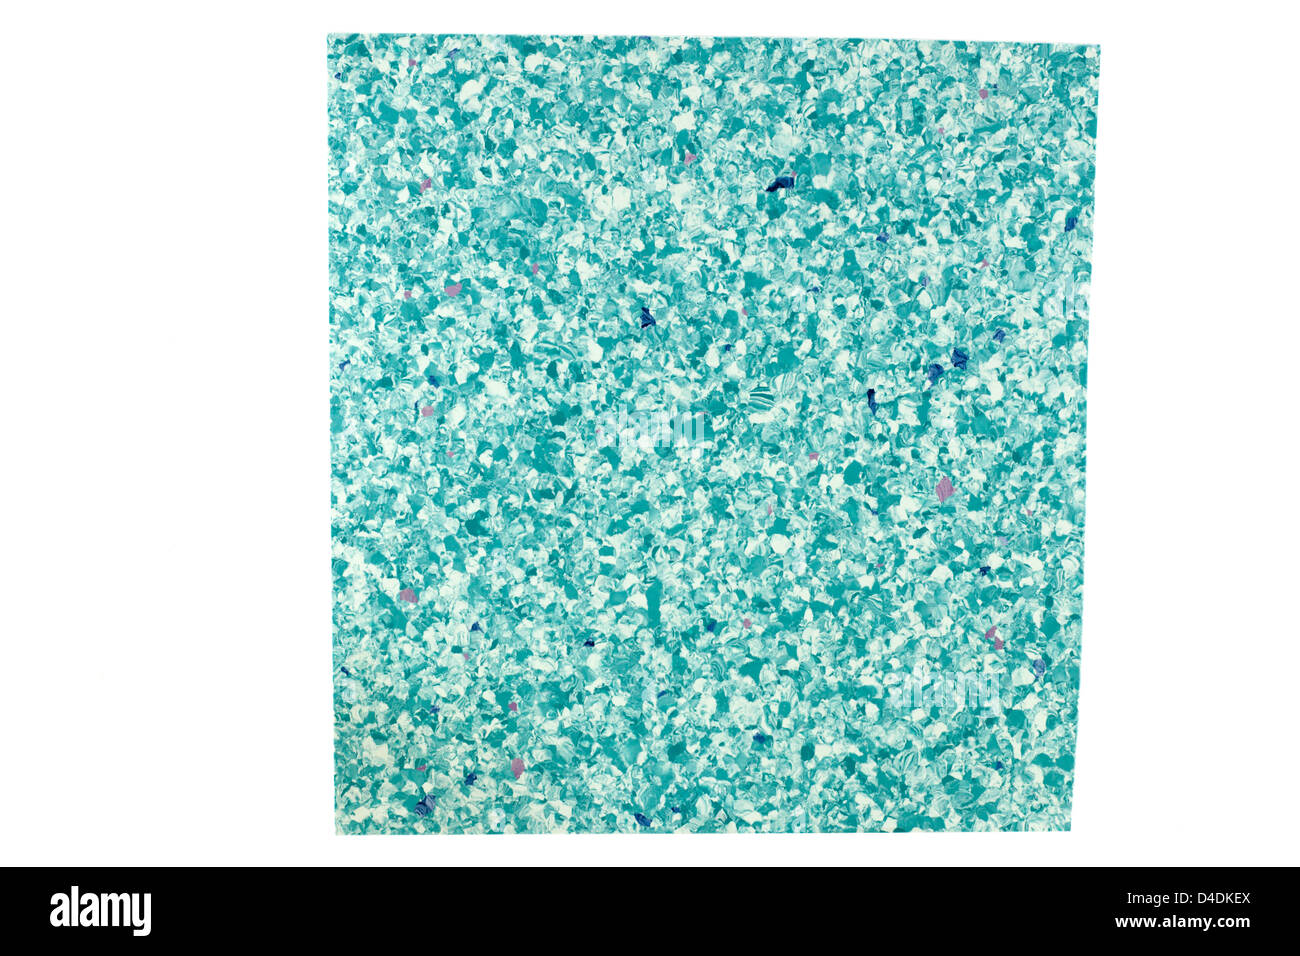 Uneven square piece of irregular turquoise vinyl flooring Stock Photo